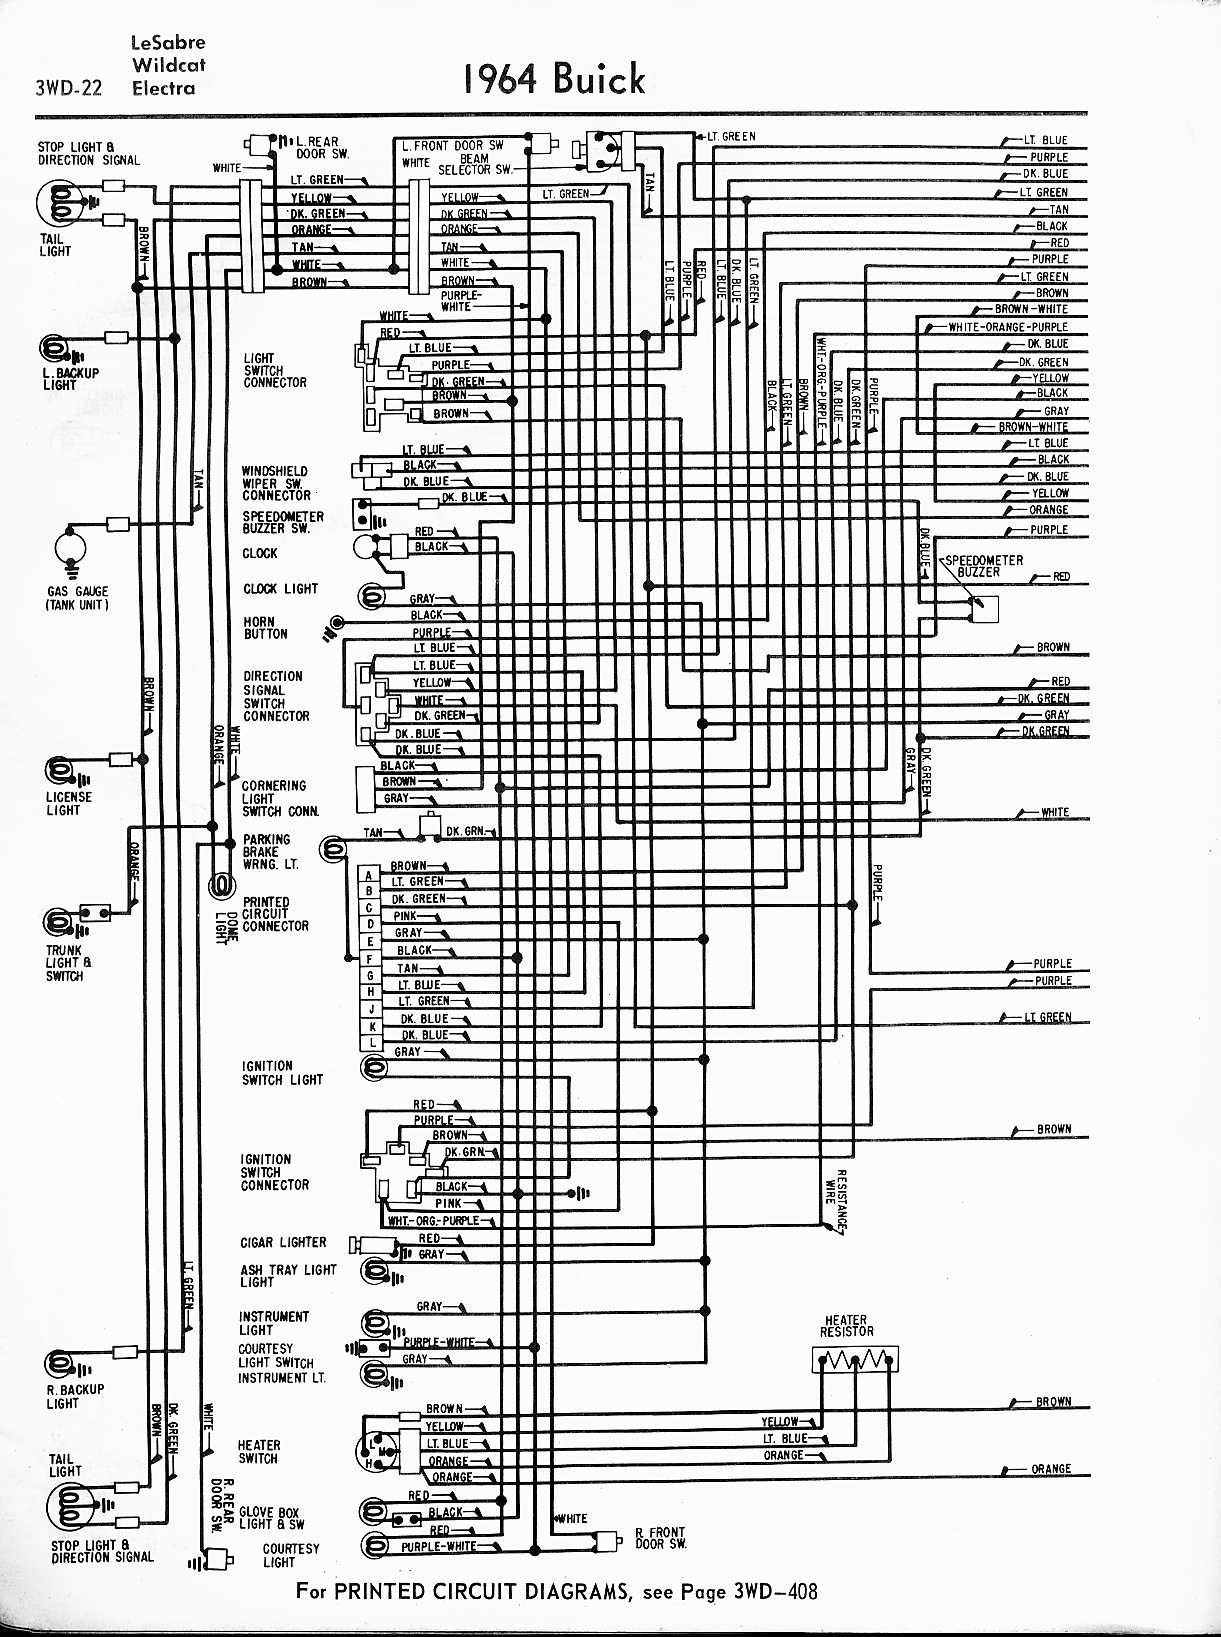 1992 Ez-go Wiring Diagram 94 Buick Lesabre Wiring Diagram Wiring Diagram Schematic Of 1992 Ez-go Wiring Diagram